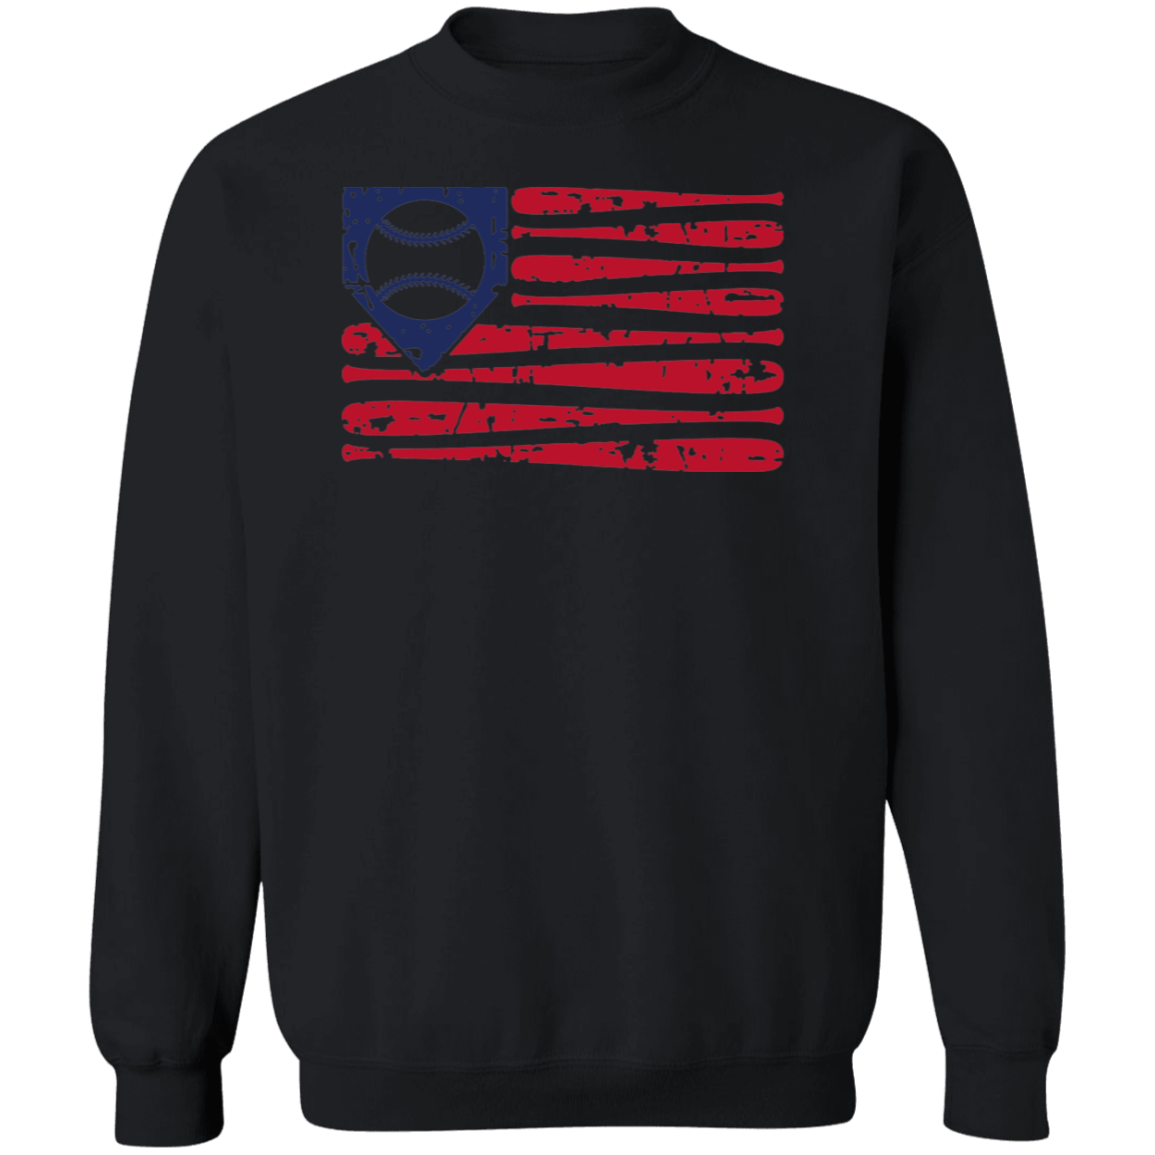 USA Flag  Premium Crew Neck Sweatshirt